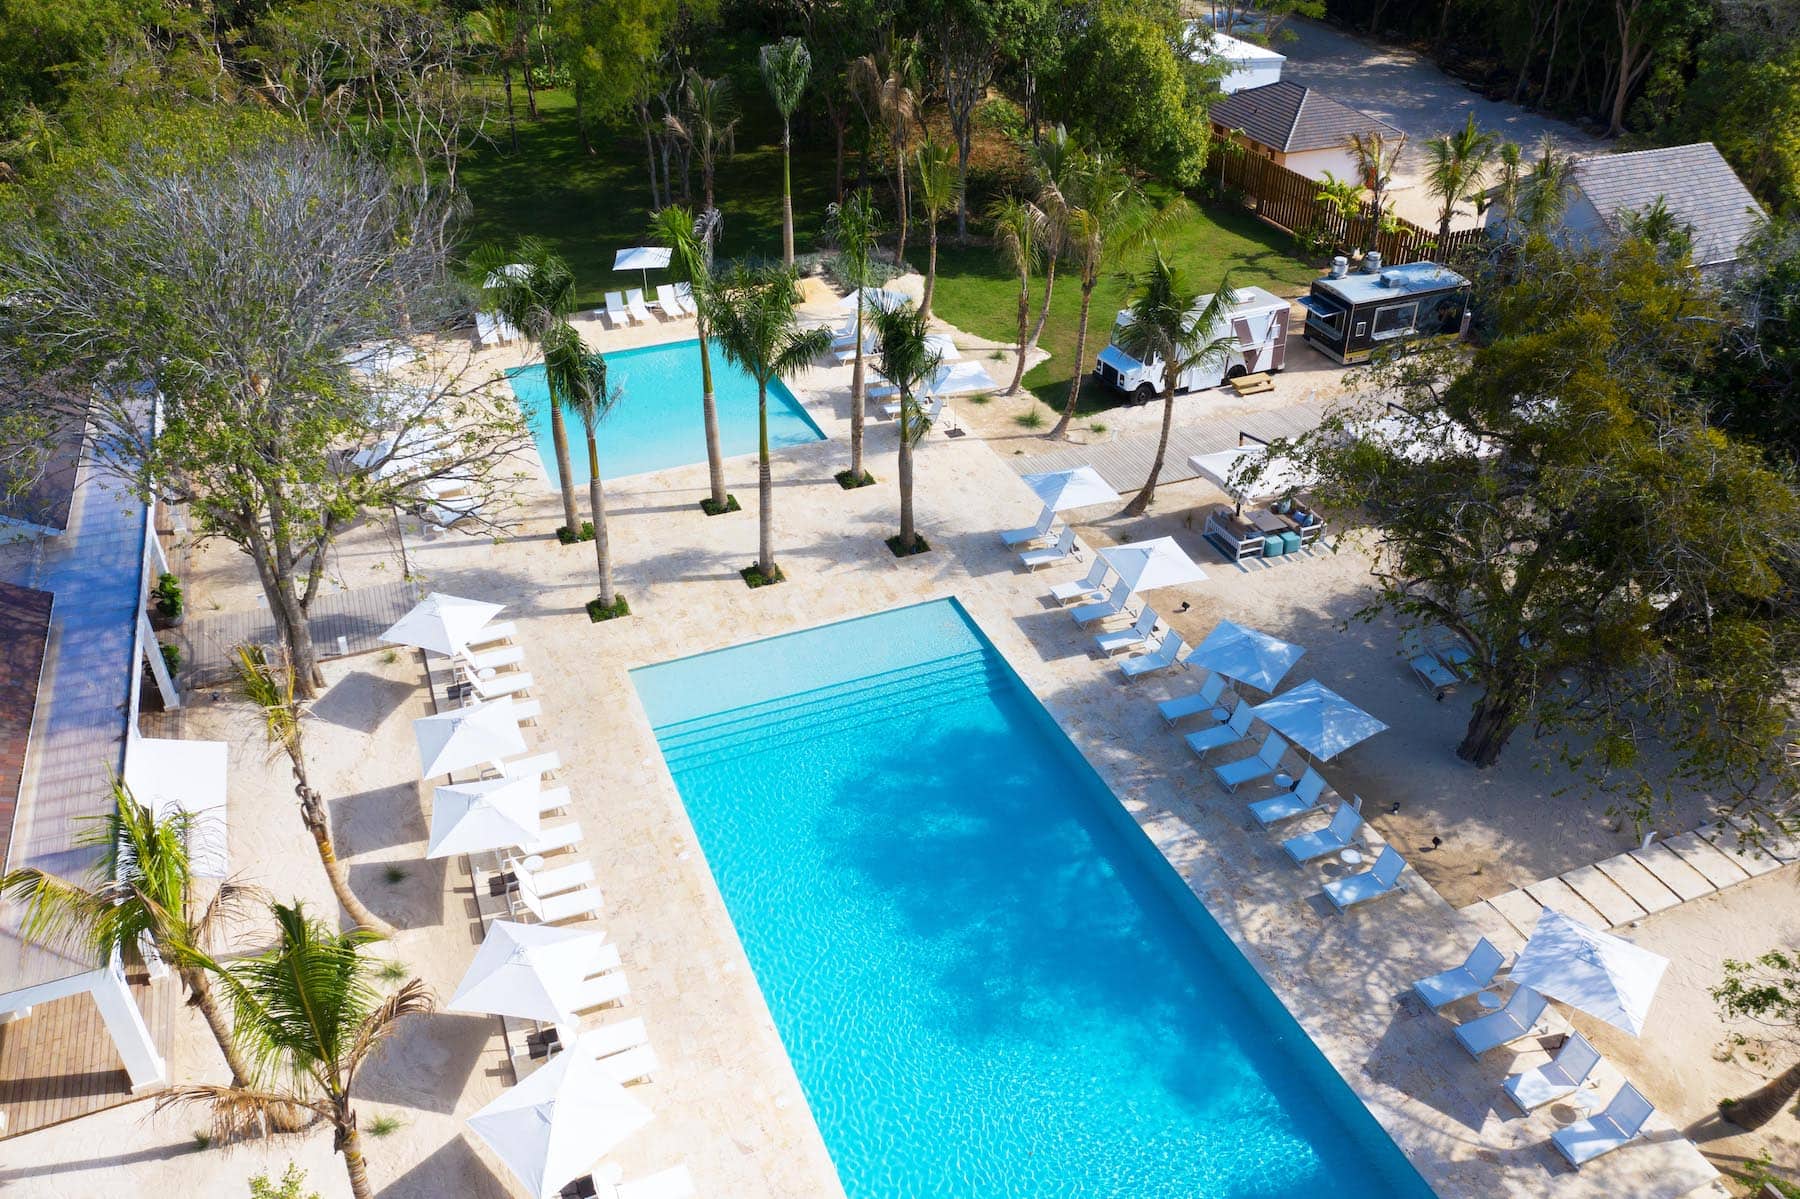 Minitas Family Pool at Casa de Campo Resort & Villas in the Caribbean.